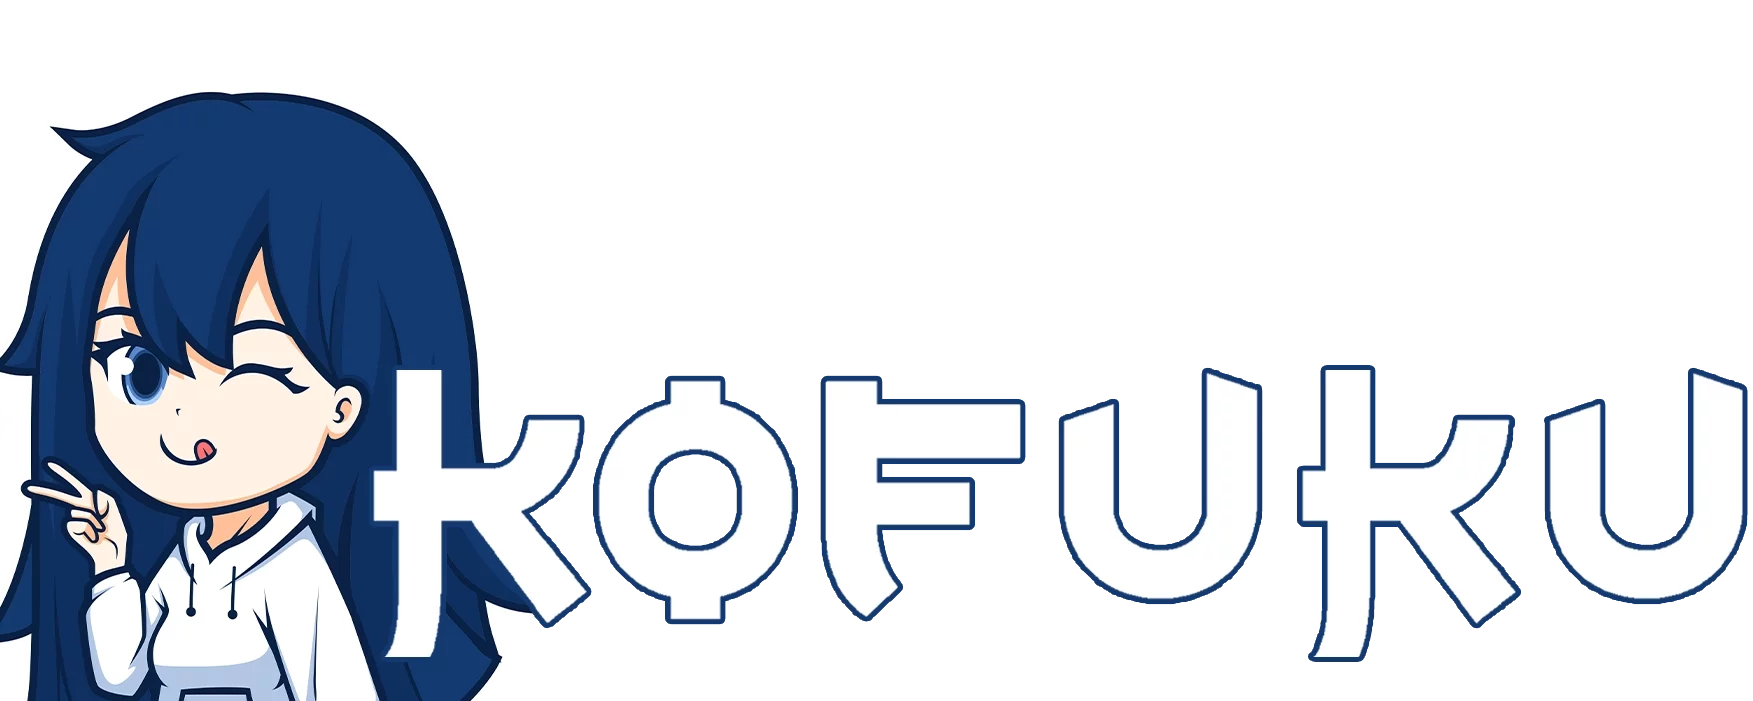 Kofuku Events